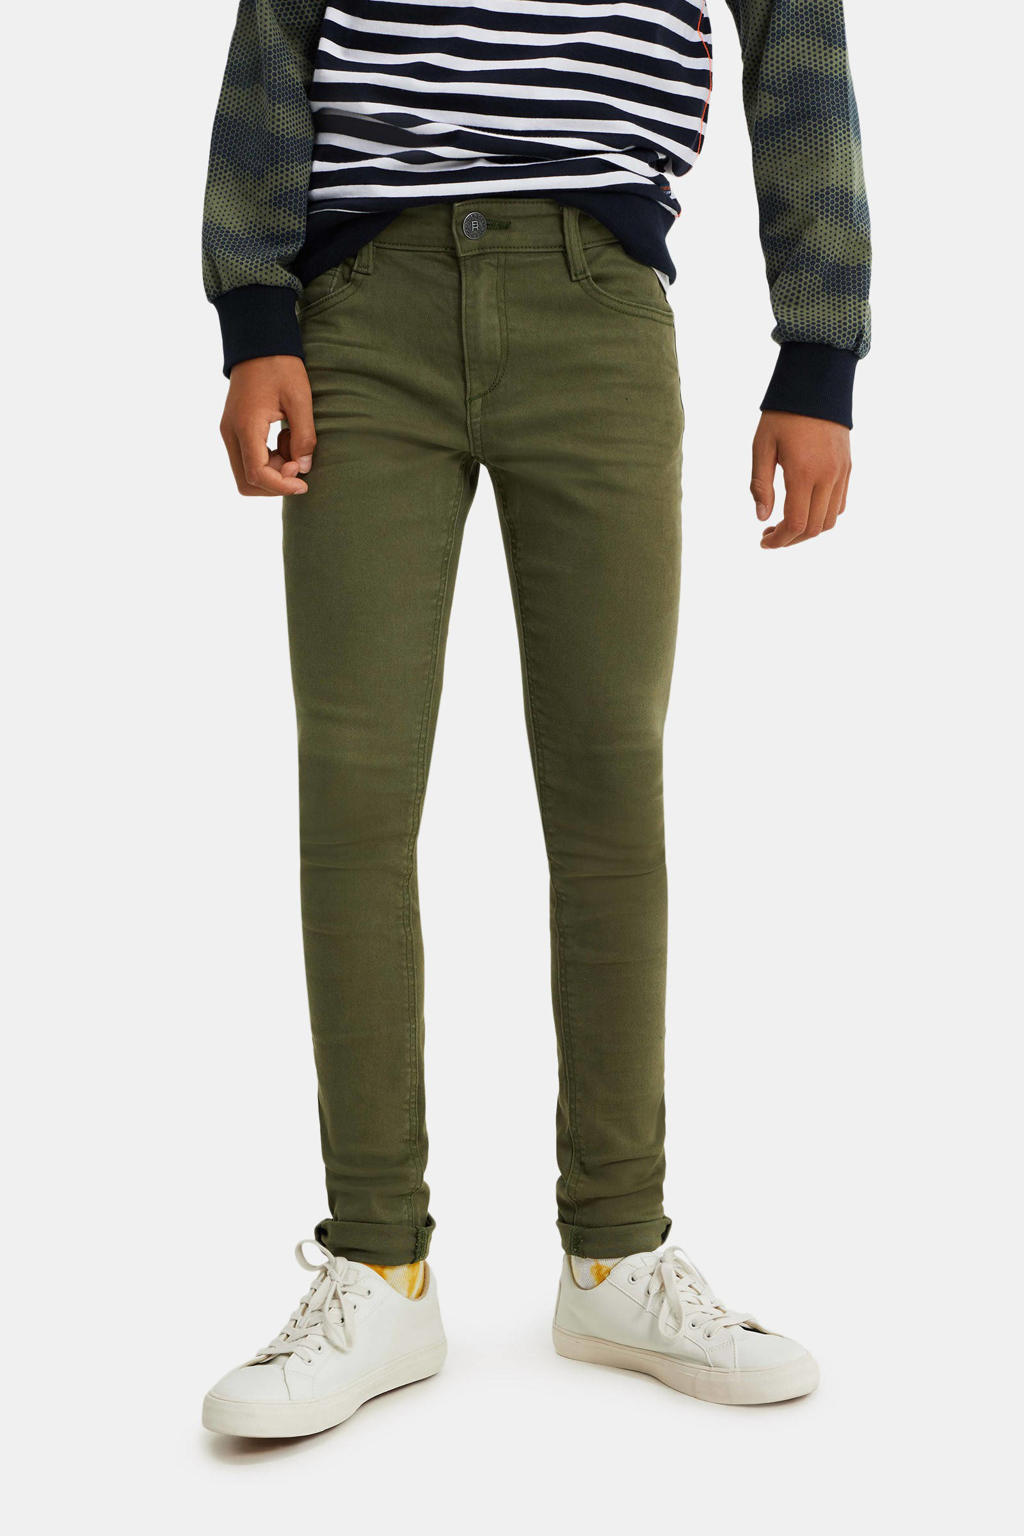 WE Fashion Blue Ridge skinny jeans groen